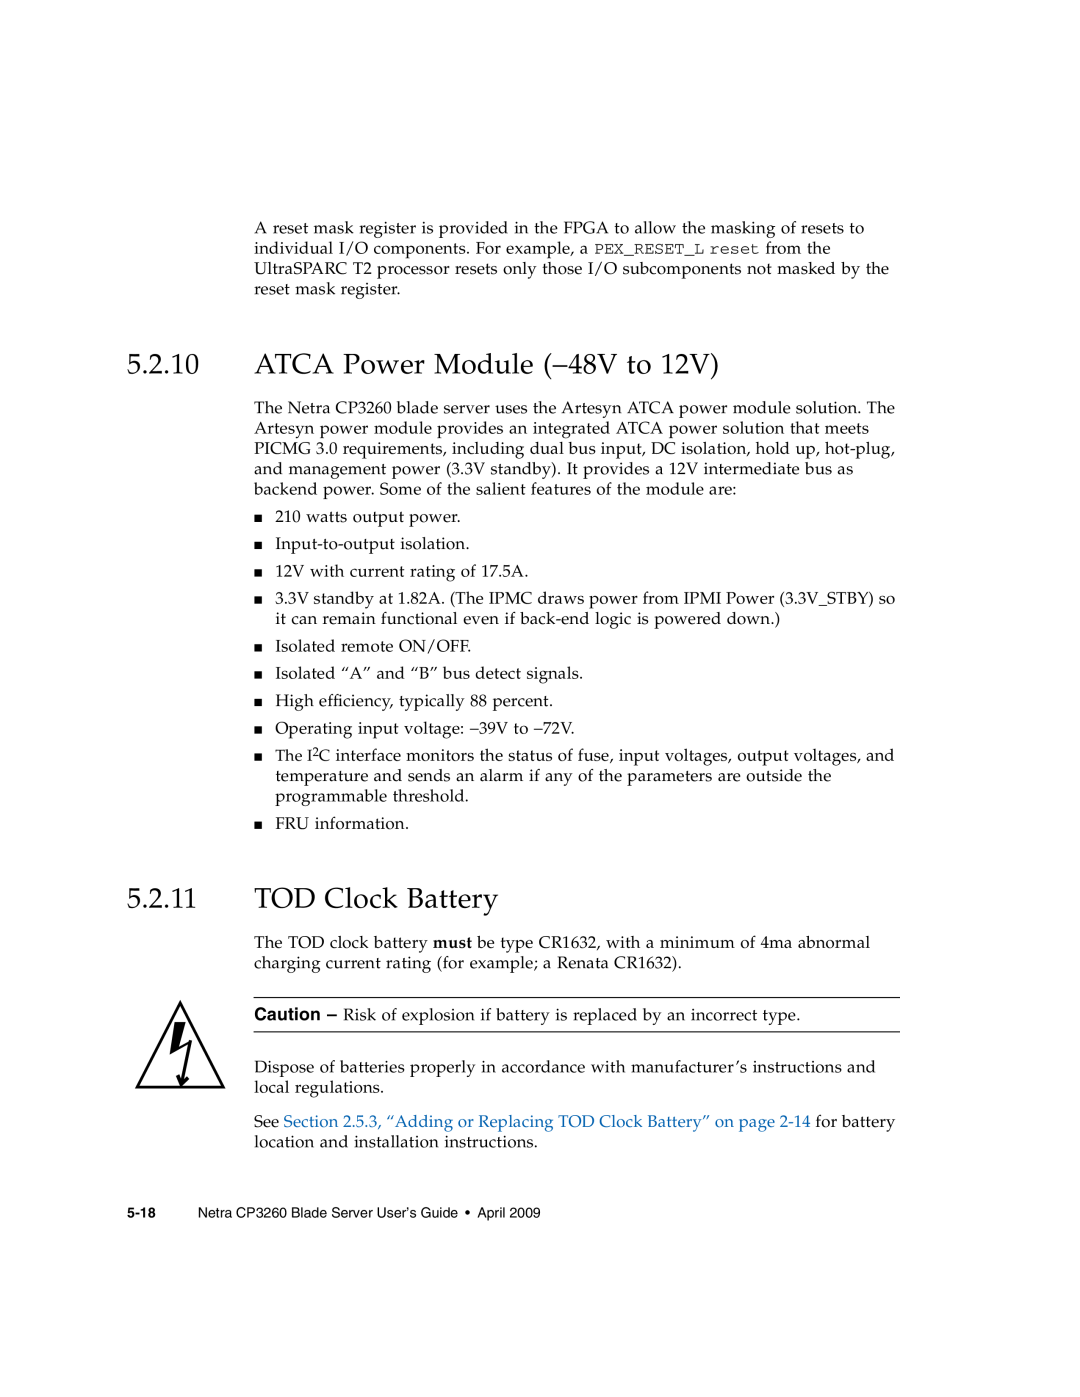 Sun Microsystems CP3260 manual ATCA Power Module −48V to, TOD Clock Battery 